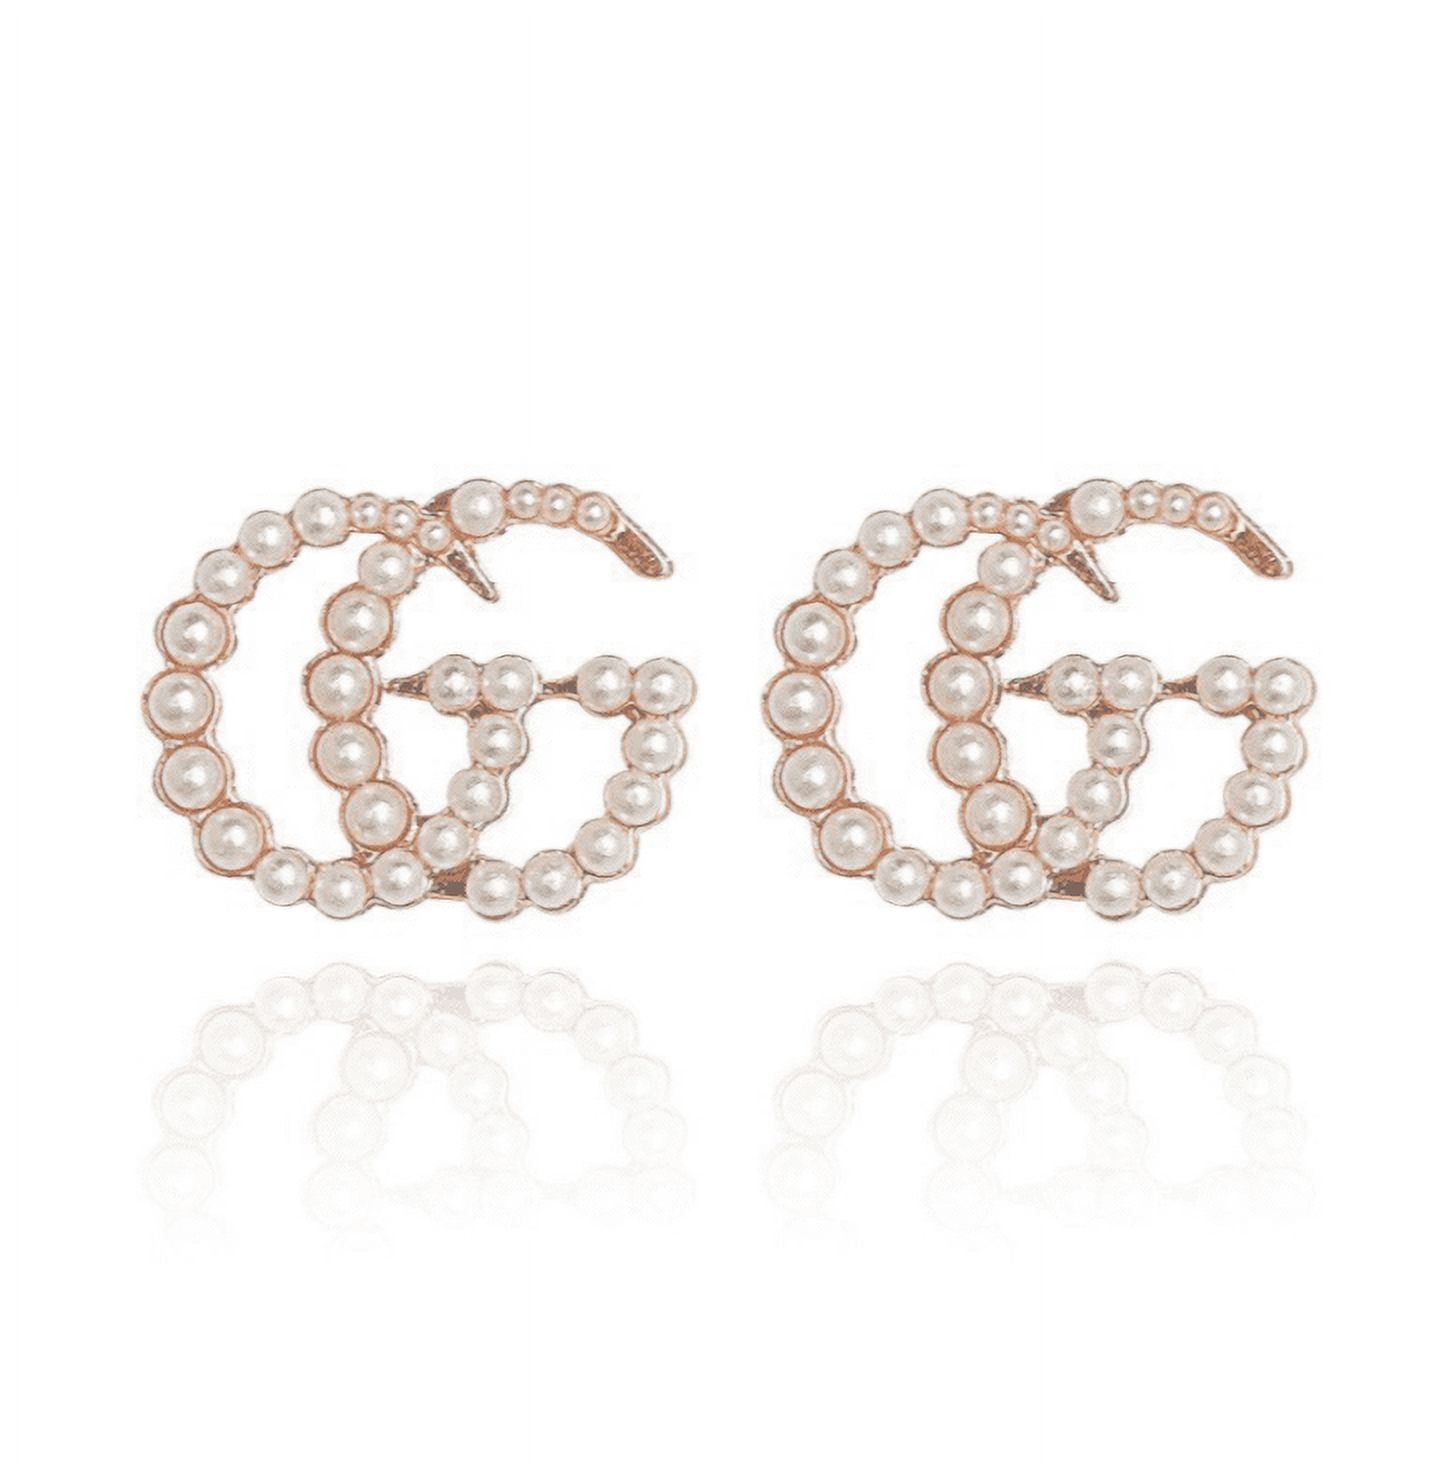 GUCCI' letter hoop earrings in gold-toned